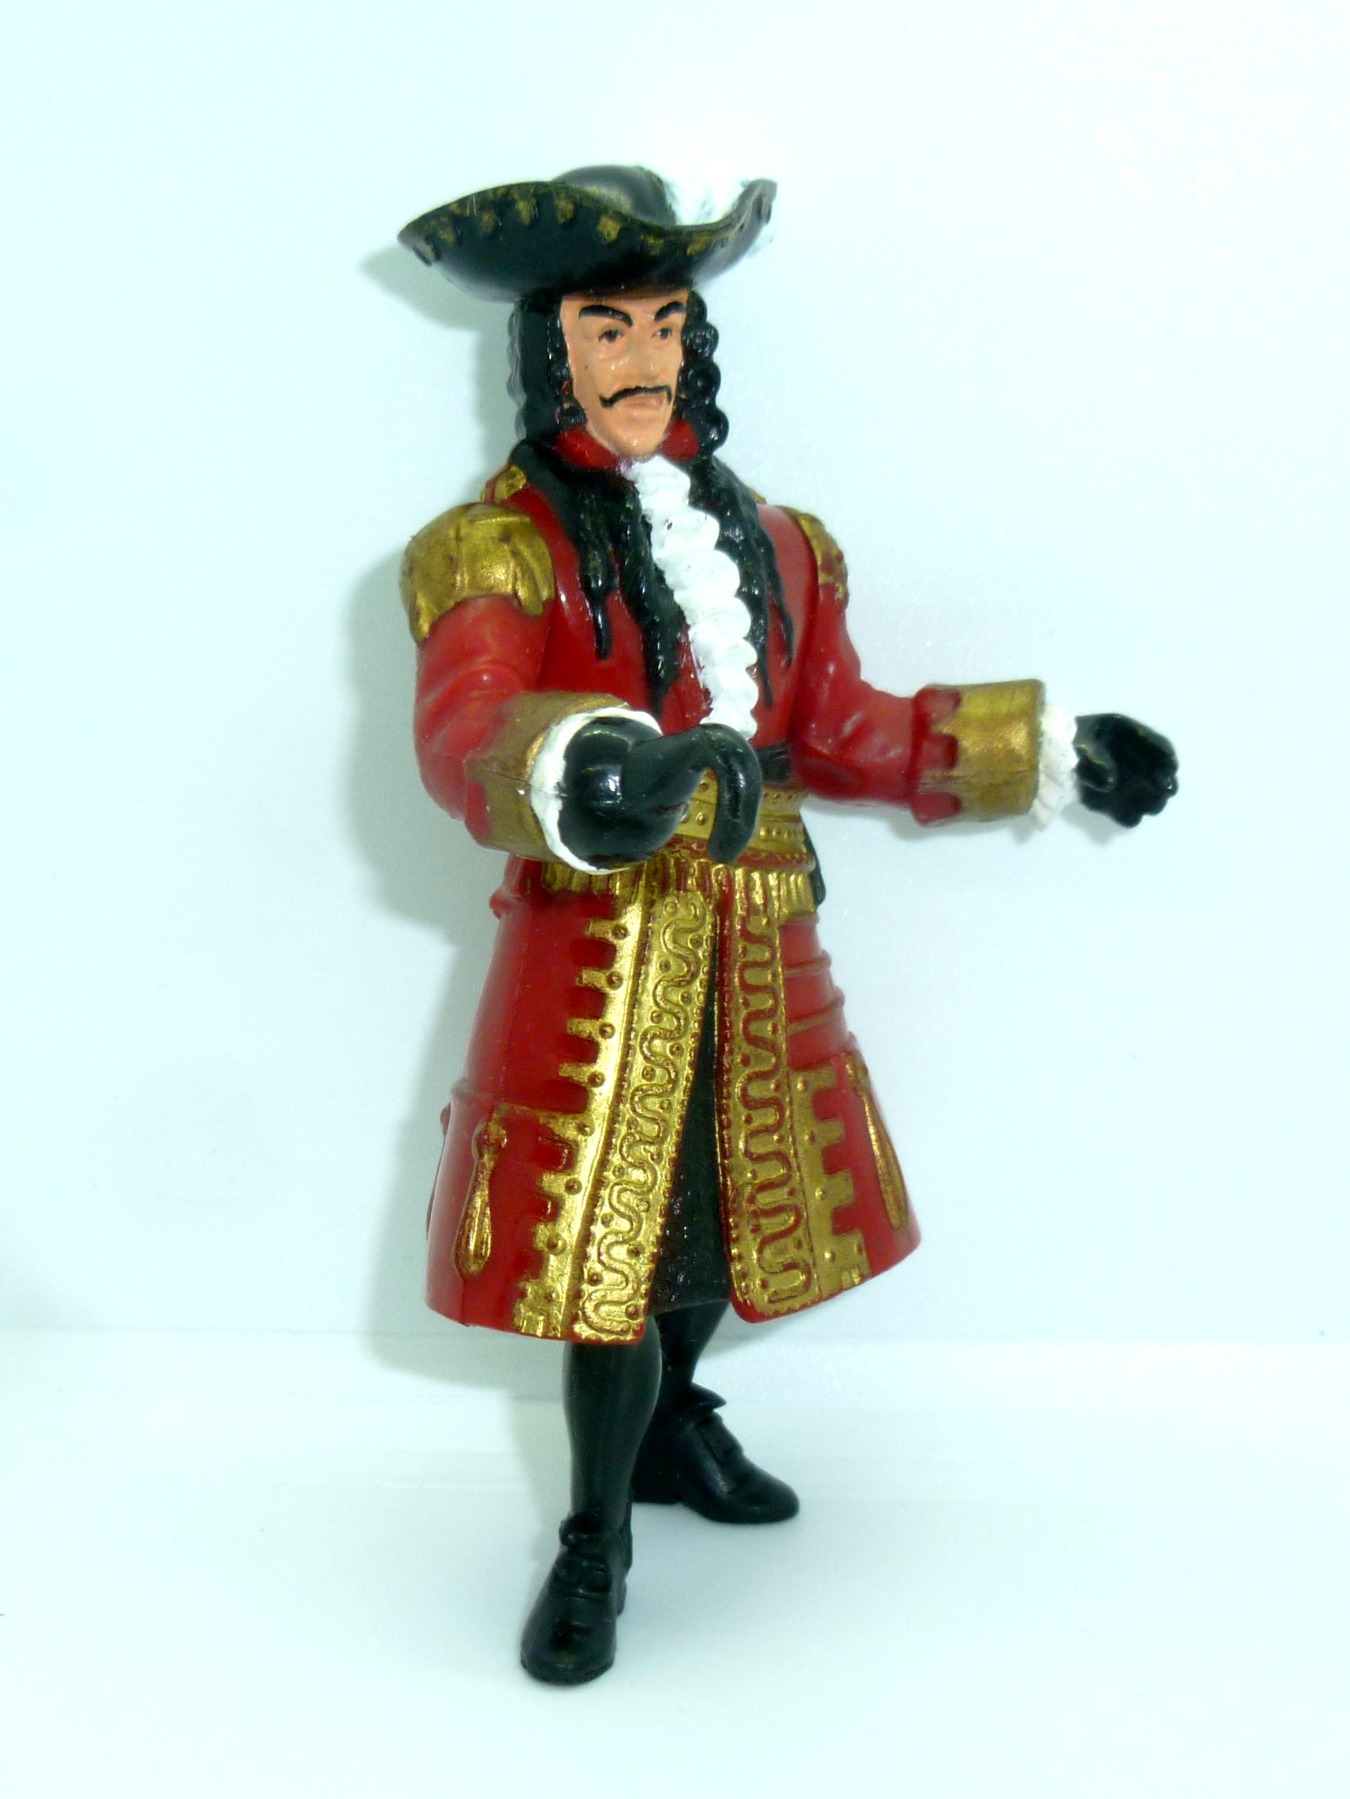 Captain Hook (Tall Terror) - Hook - 90s action figure, Online Shop